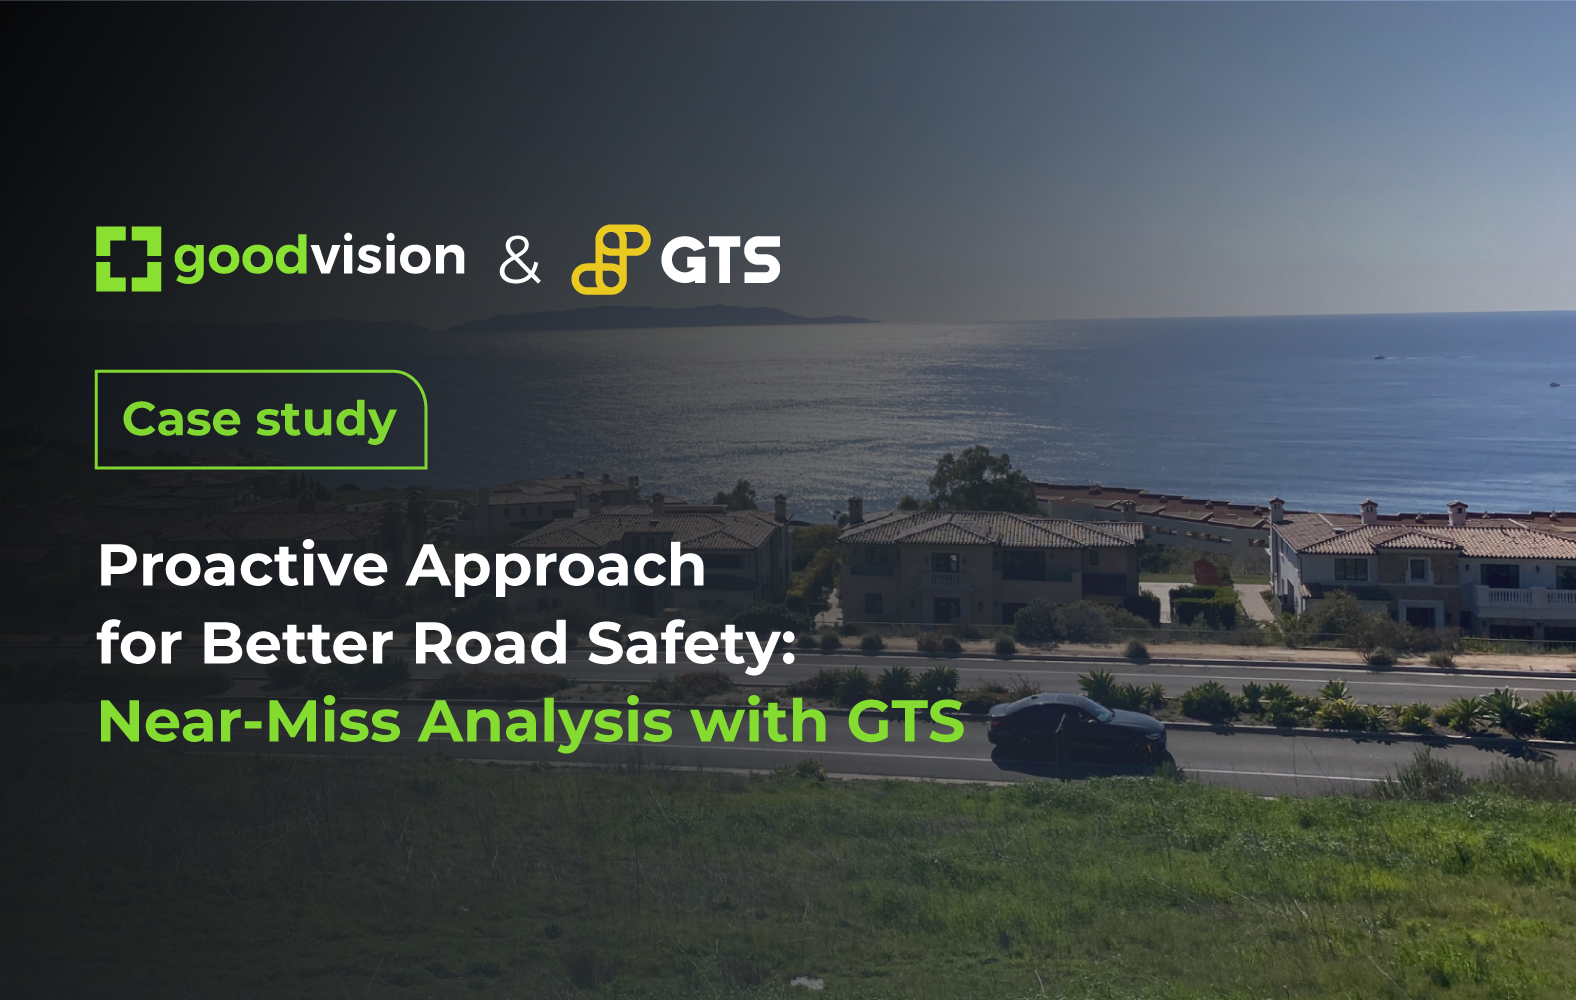 gts case study goodvision